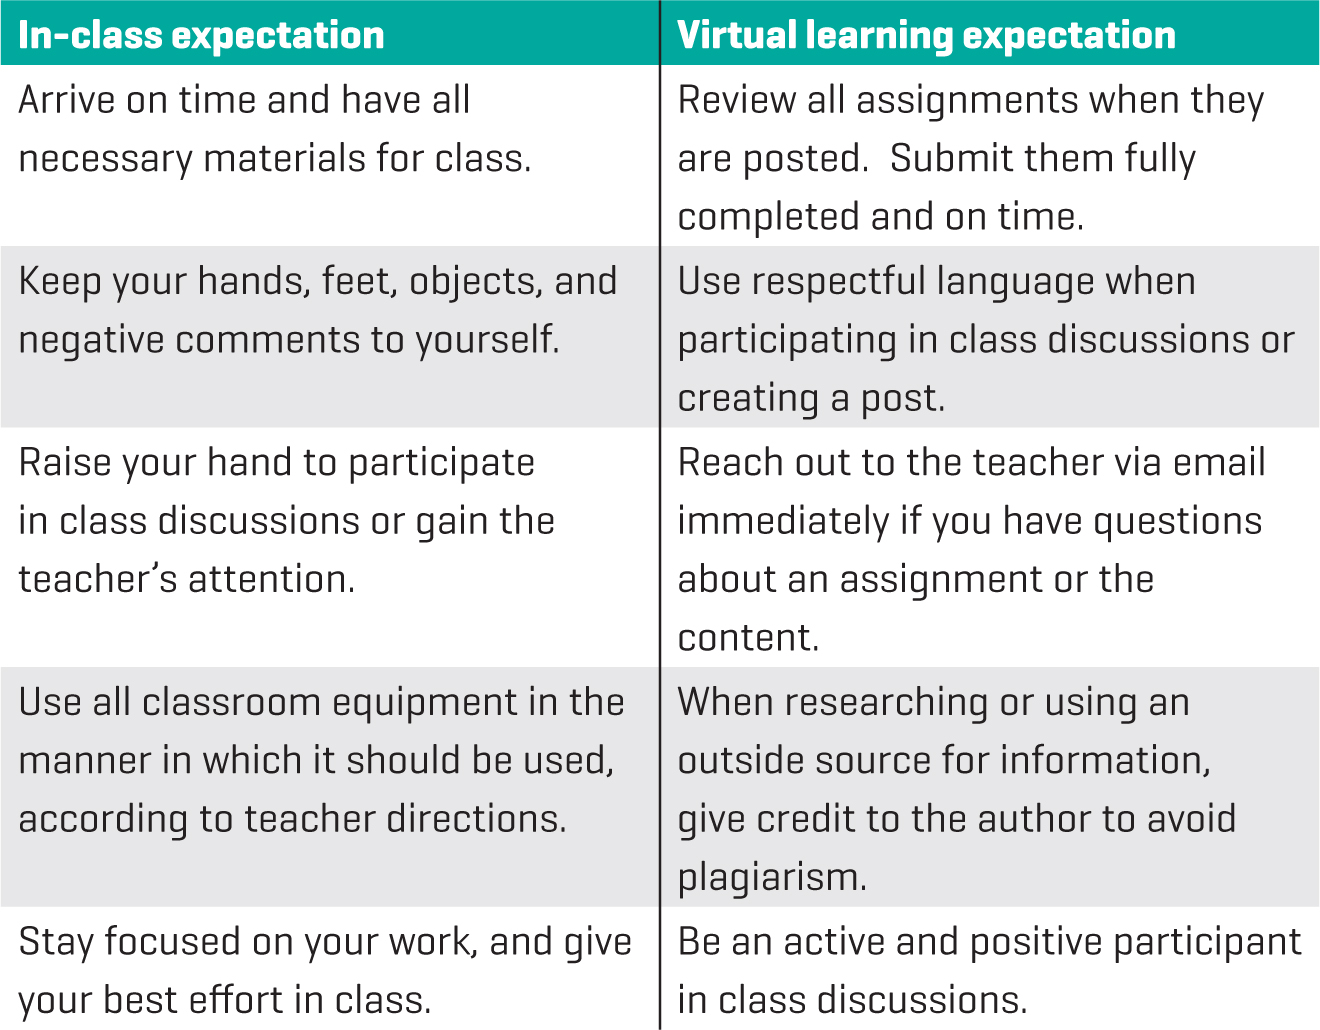 Sample virtual learning expectations (Dunn 2014).